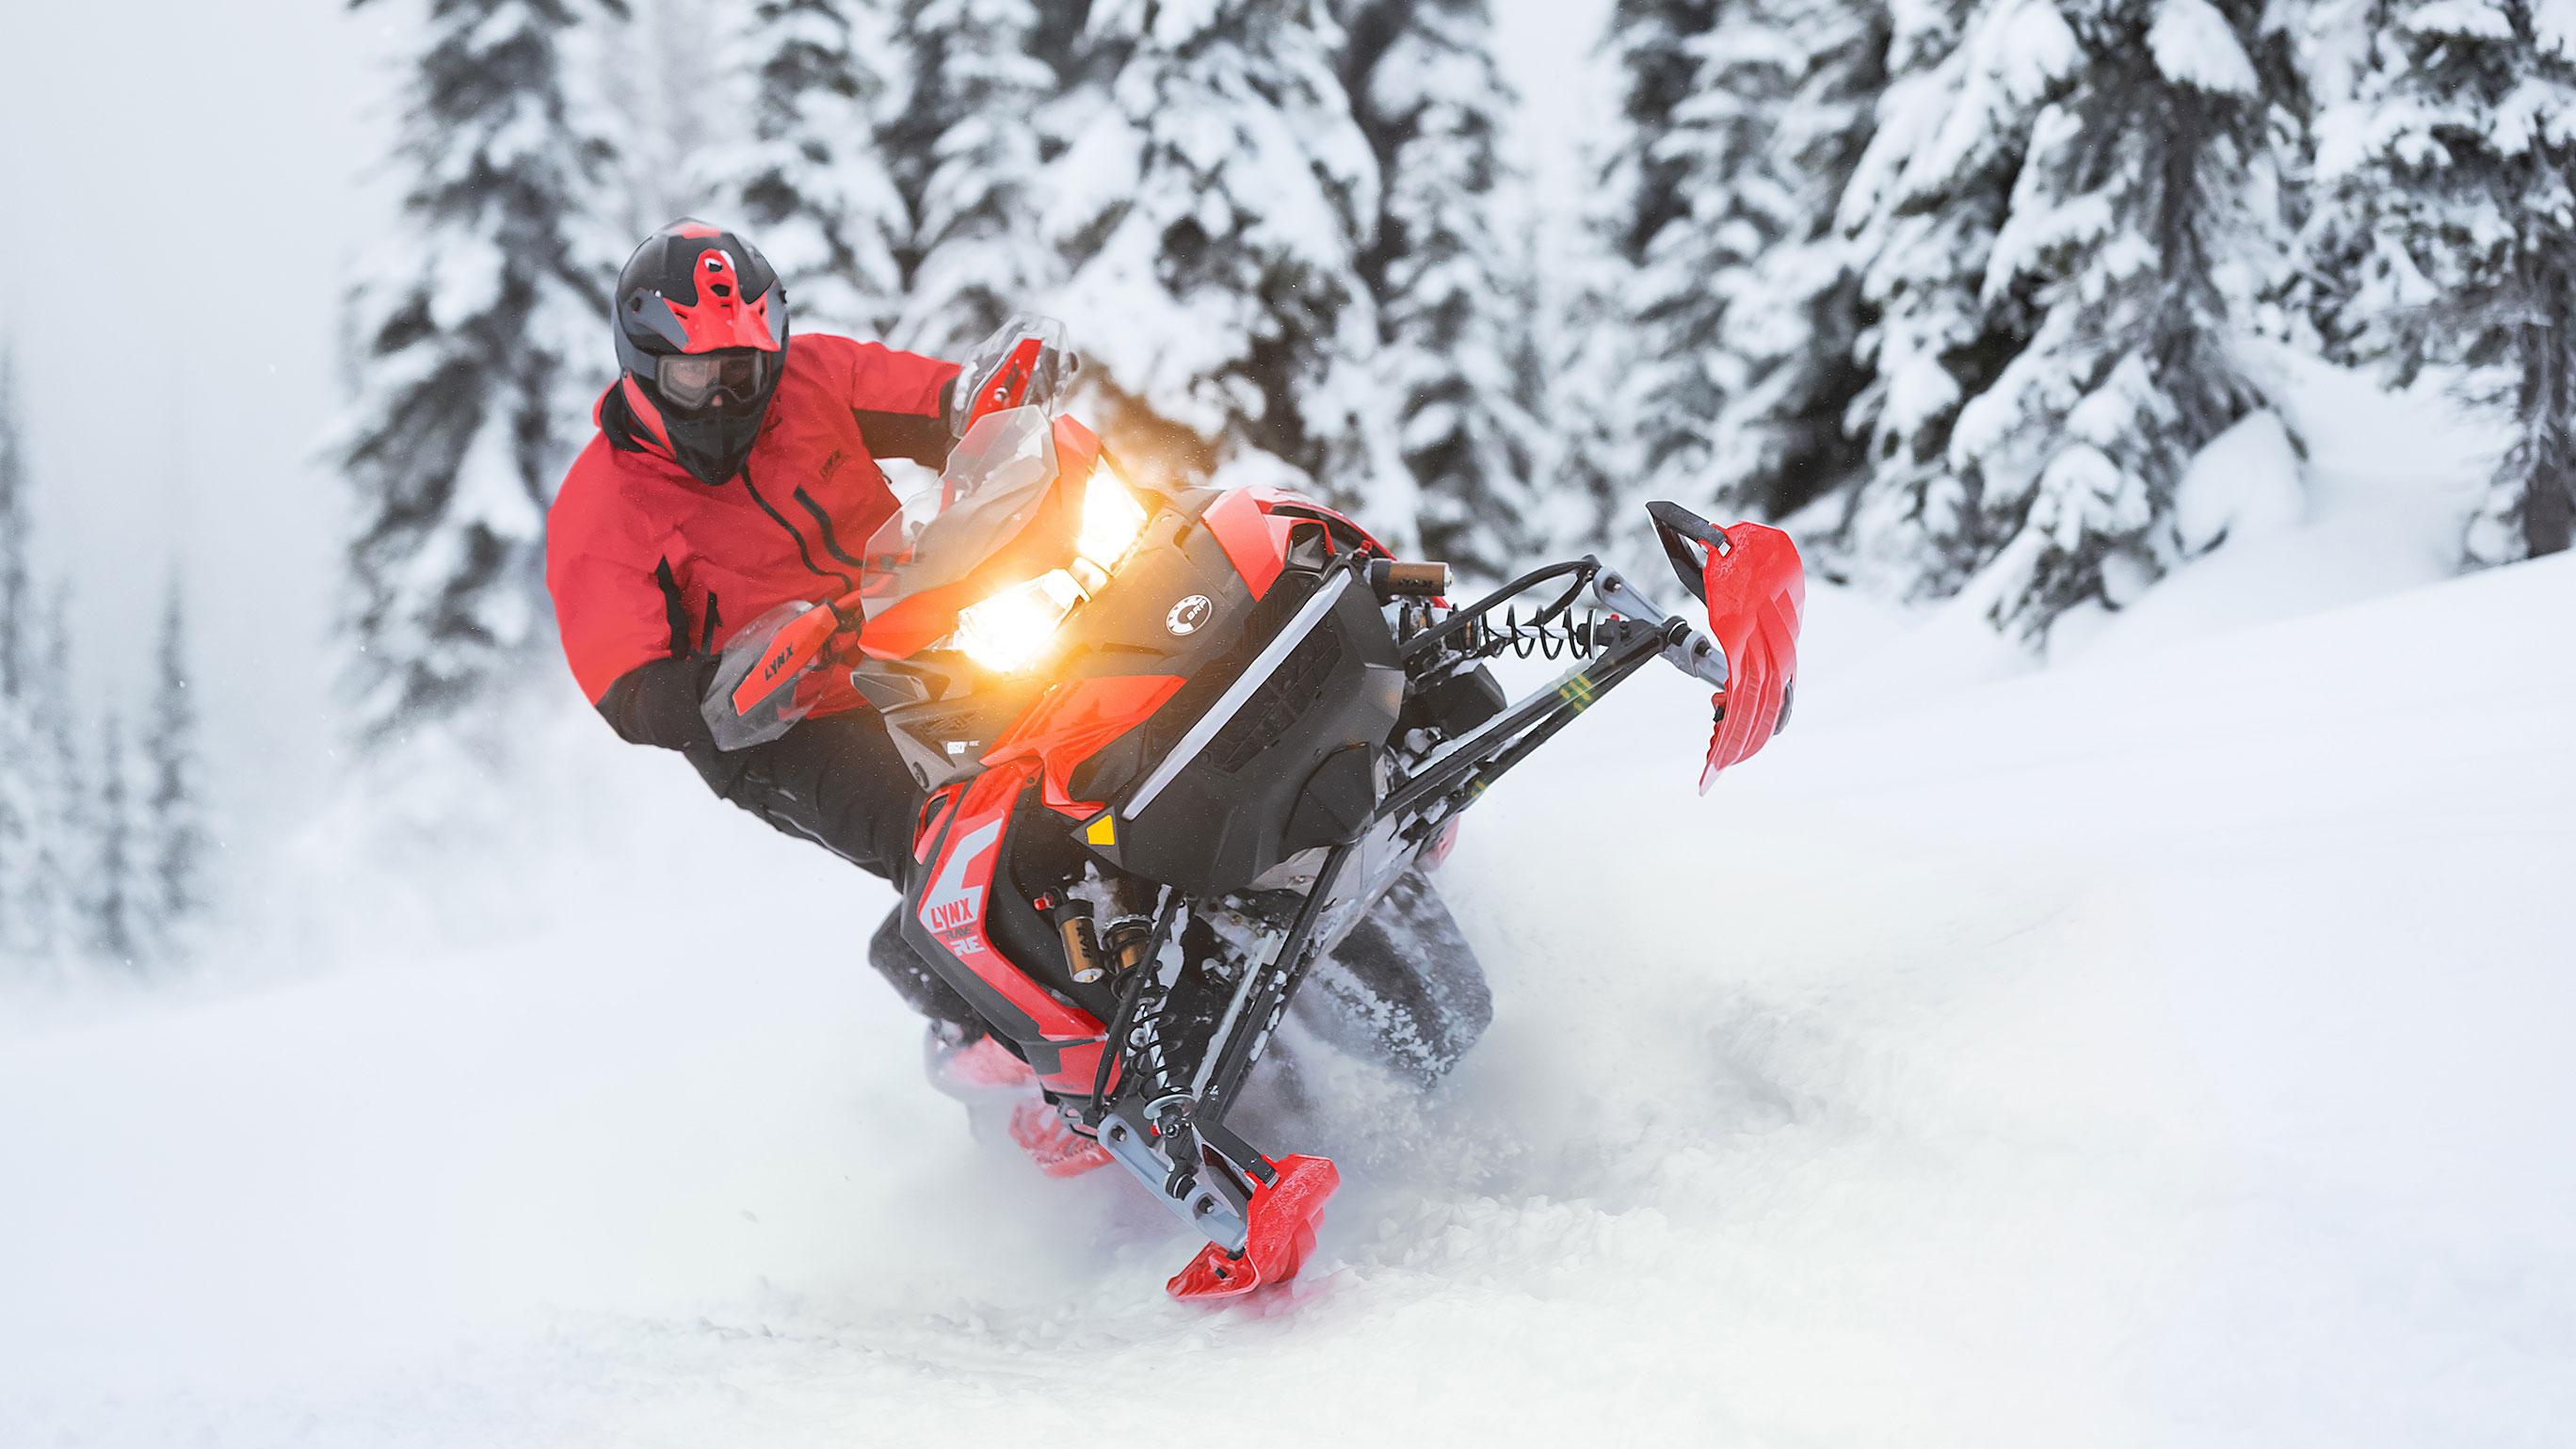 Lynx Rave snowmobiles sporty riding on bumpy trail